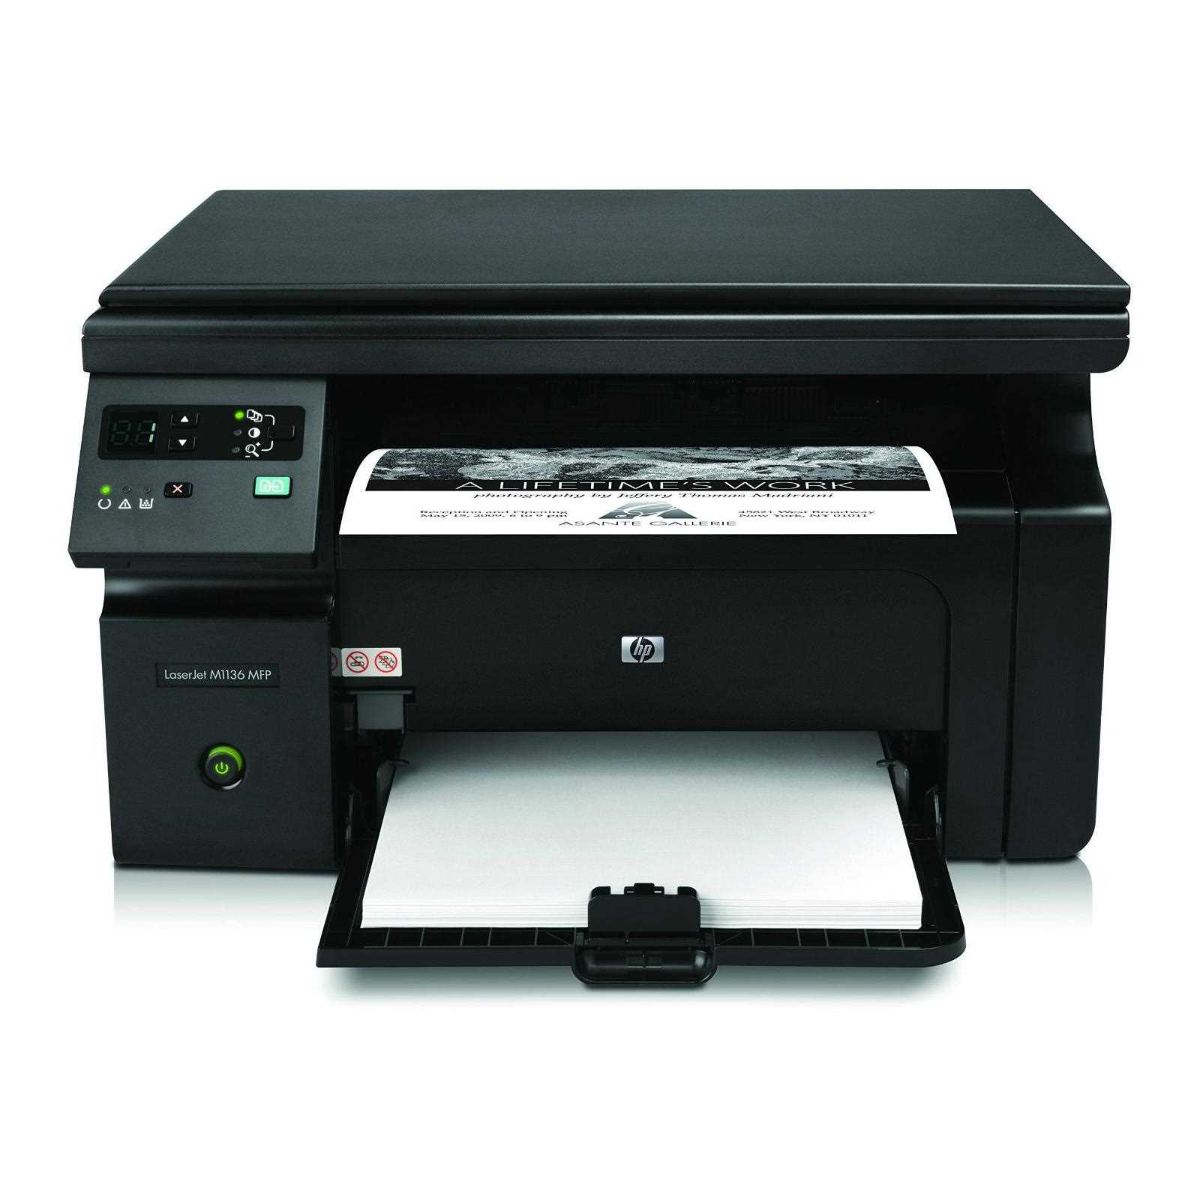 HP-LaserJet M1136 MFP Printer